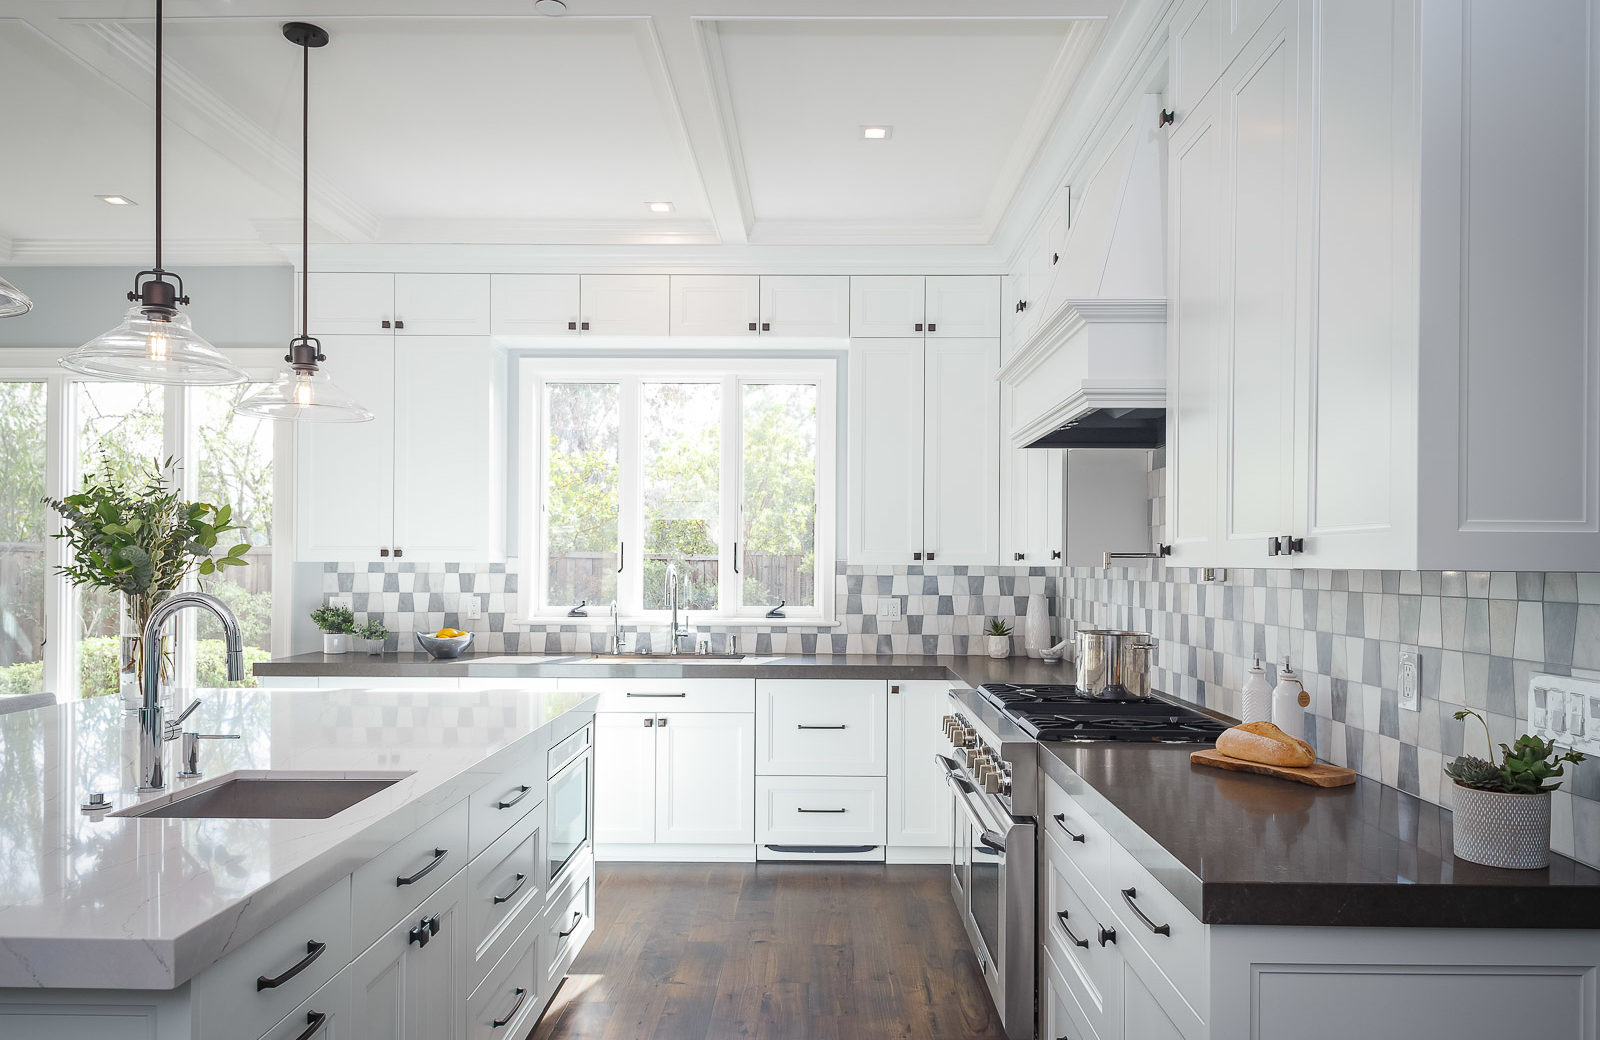 white cabinets, quartz countertops, tile backsplash, large island, white painted kitchen cabinets